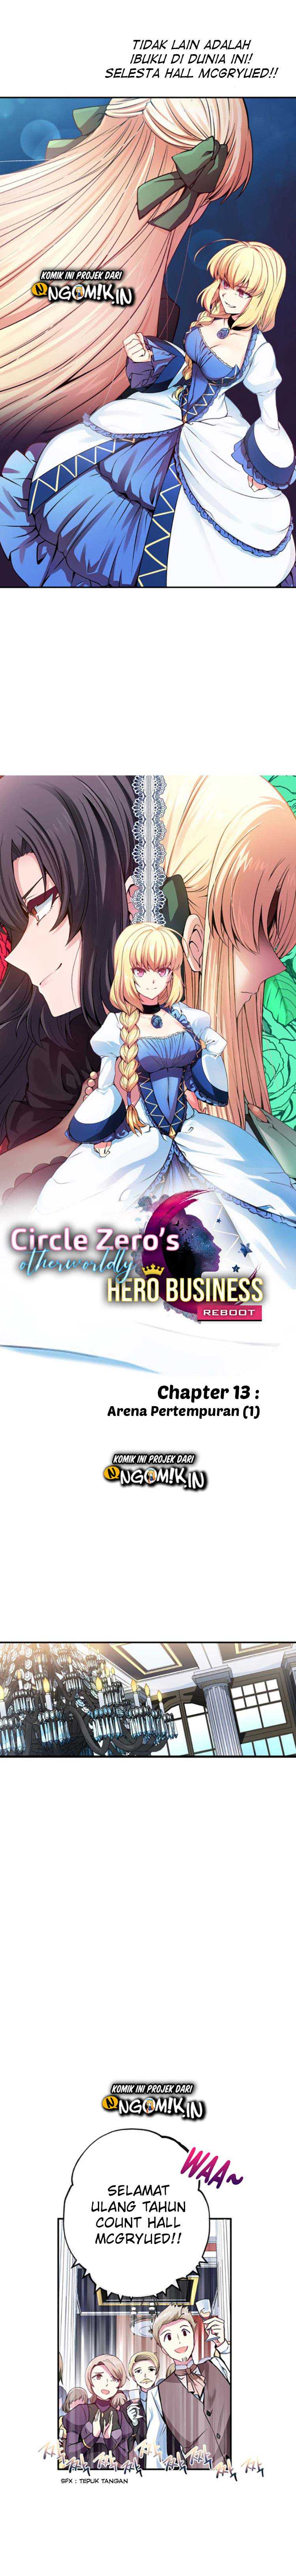 Circle Zero’s Otherworldly Hero Business: Reboot Chapter 13